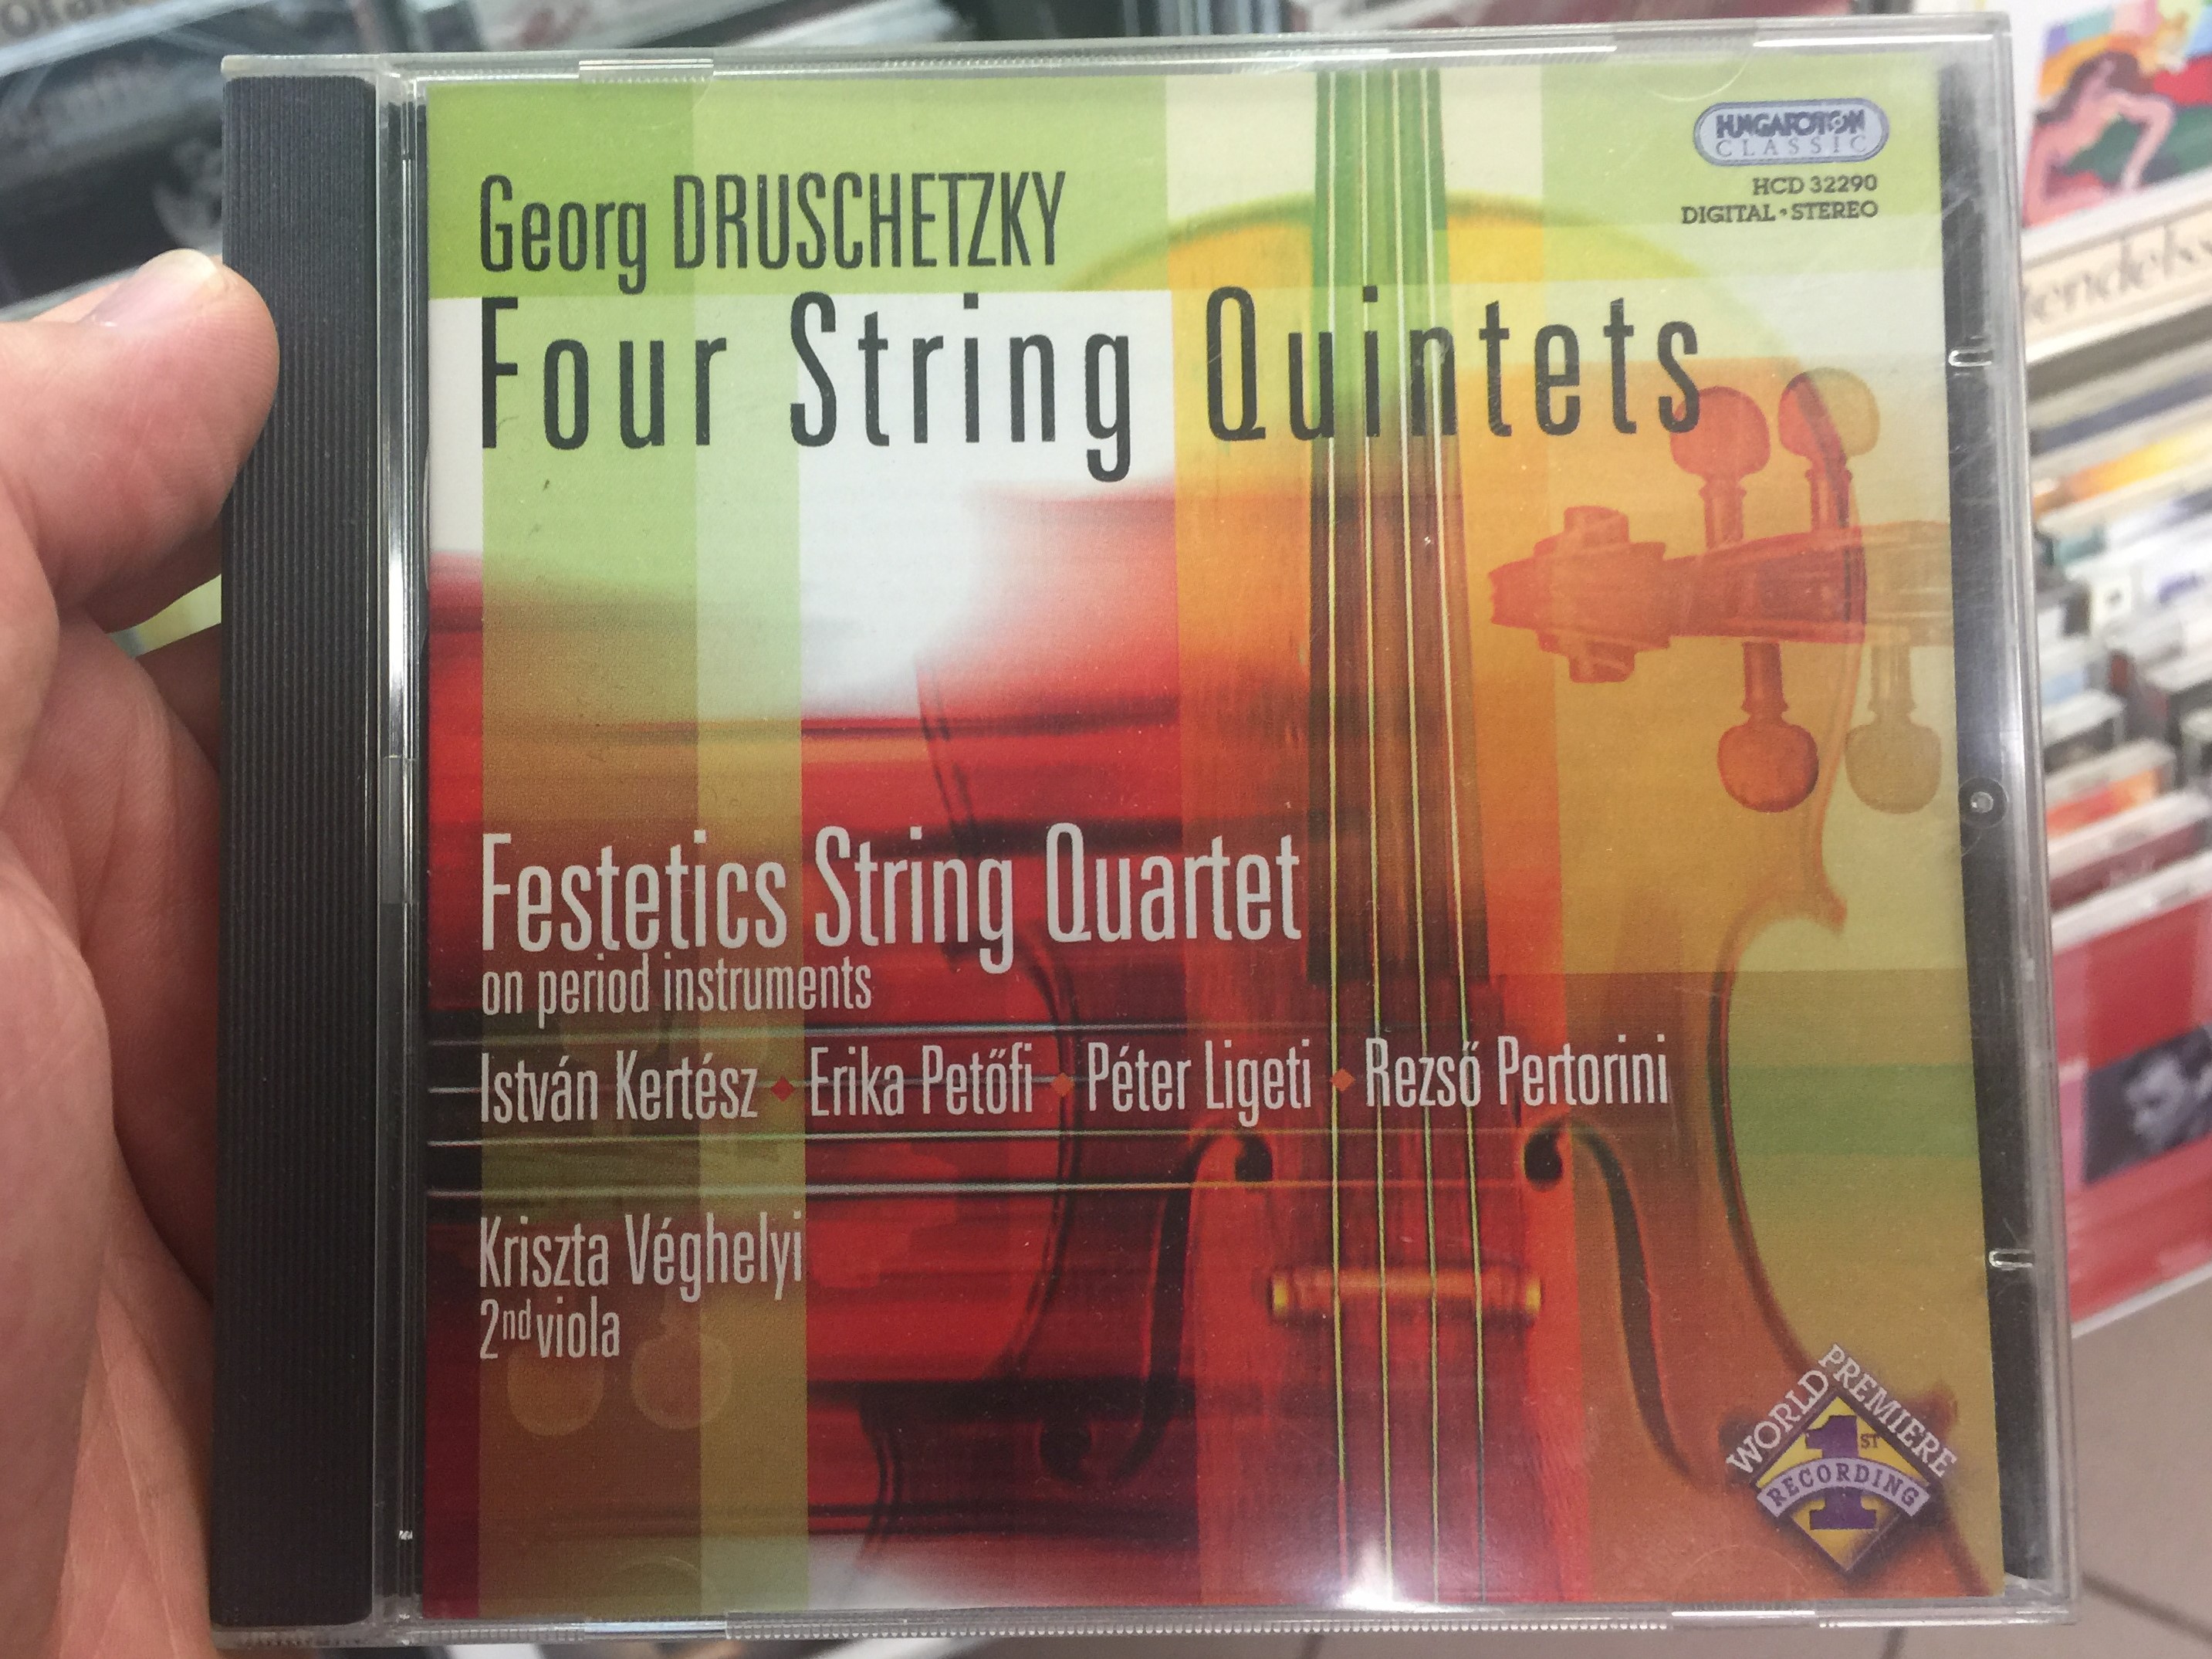 georg-druschtetzky-four-string-quintets-festetics-string-quartet-on-period-instruments-istvan-kertesz-erika-petofi-peter-ligeti-rezso-pertorini-kriszta-veghelyi-2nd-viola-hungaroton-clas-1-.jpg